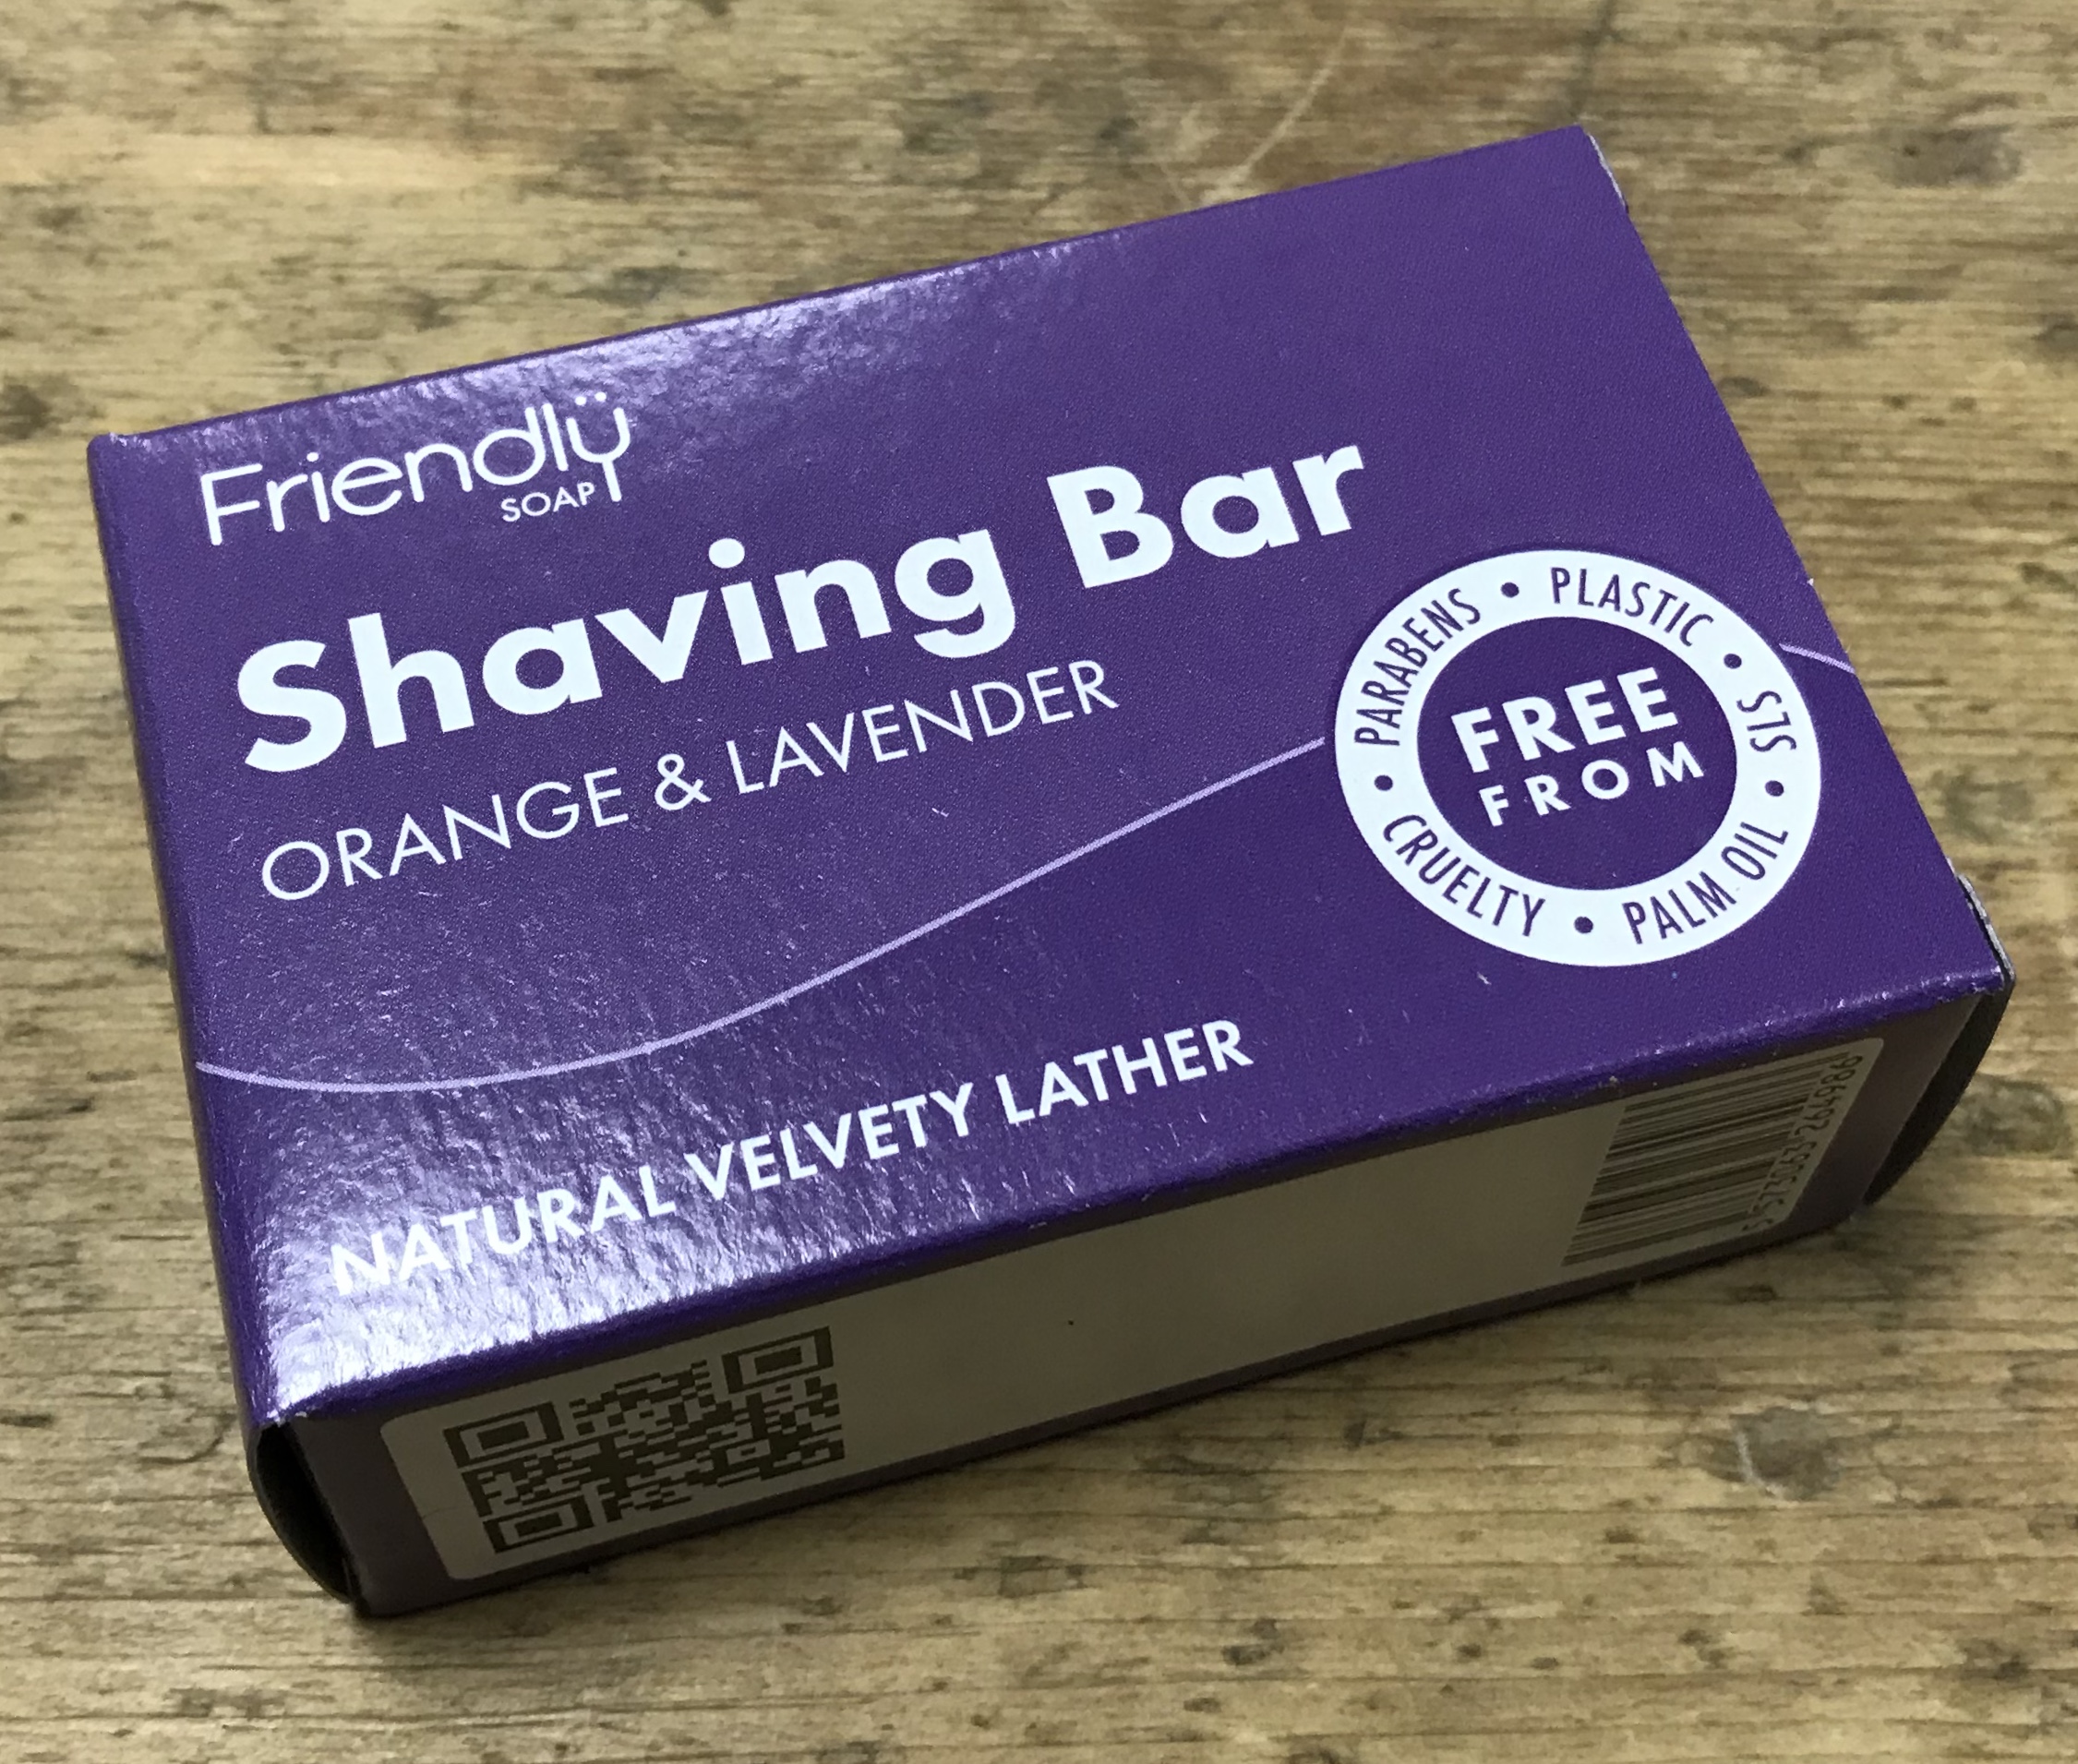 Friendly Soap Shaving Bar